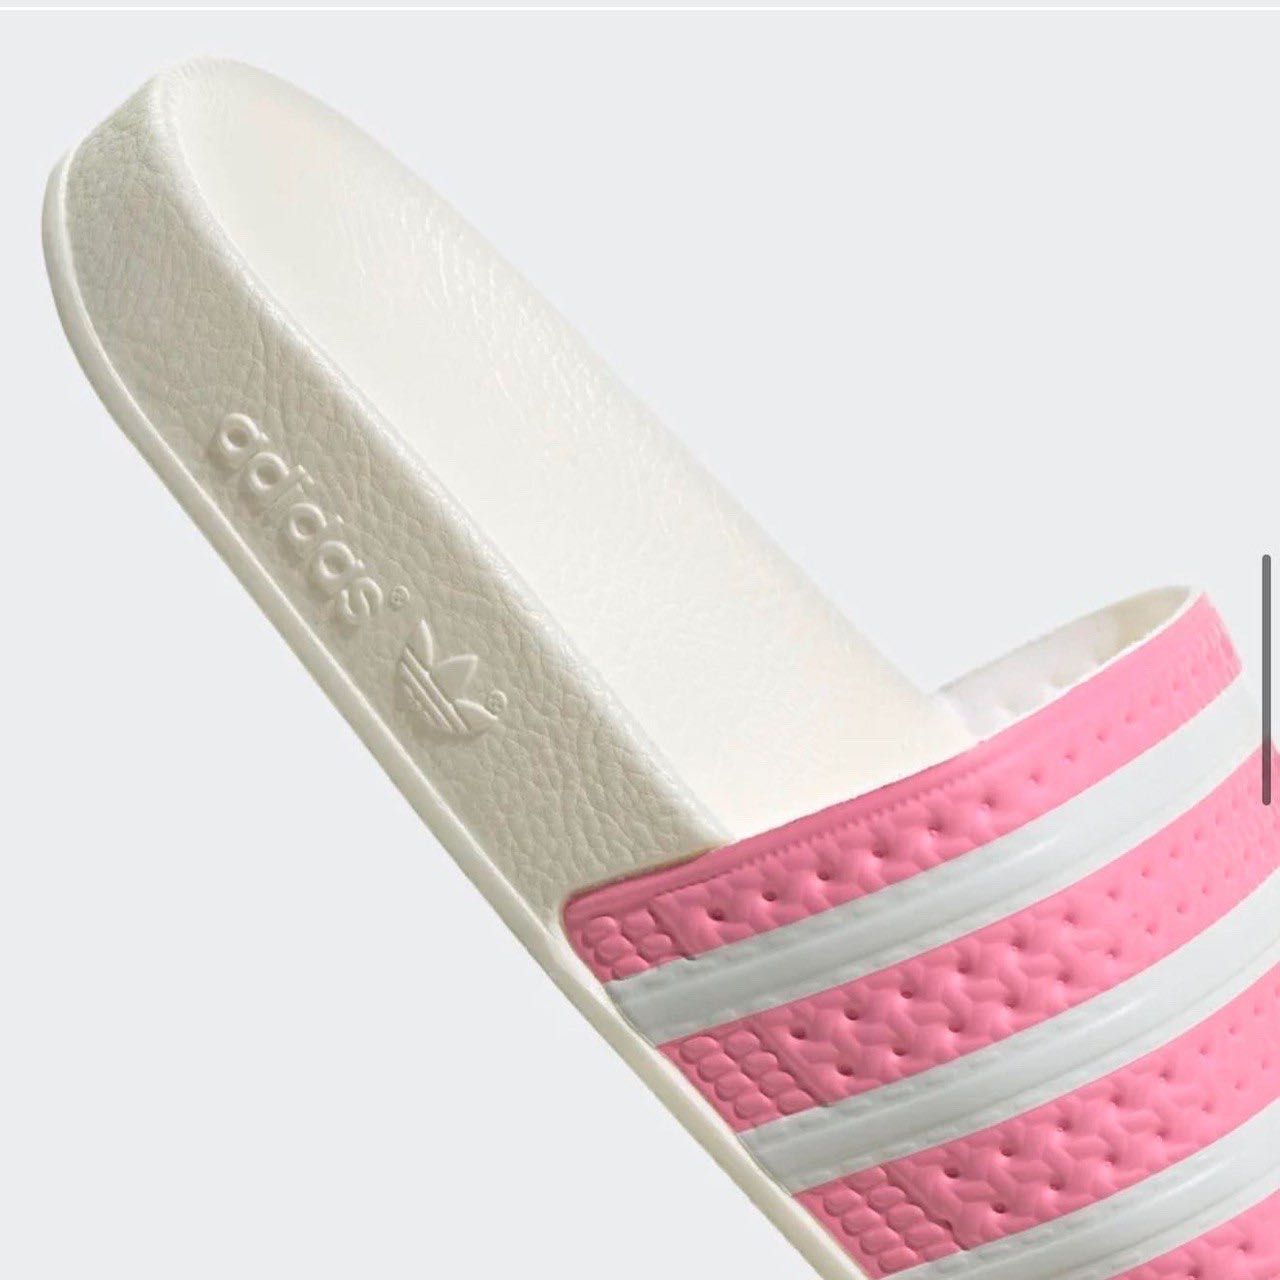 Adidas comfort slides for women